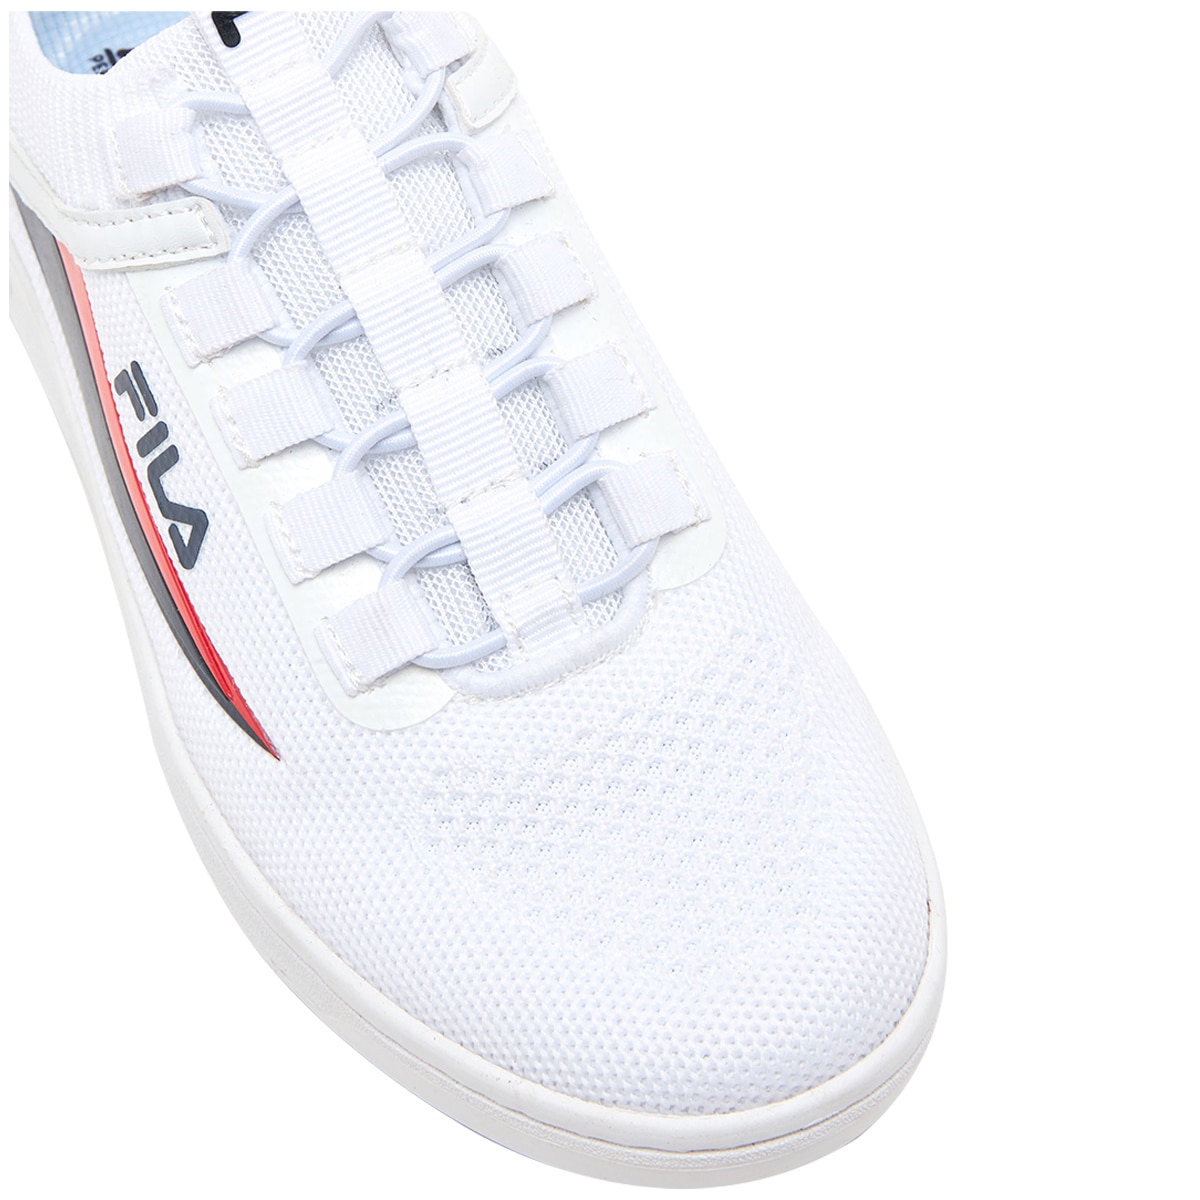 Fila - Teramo Knit Shoe - White Navy Red